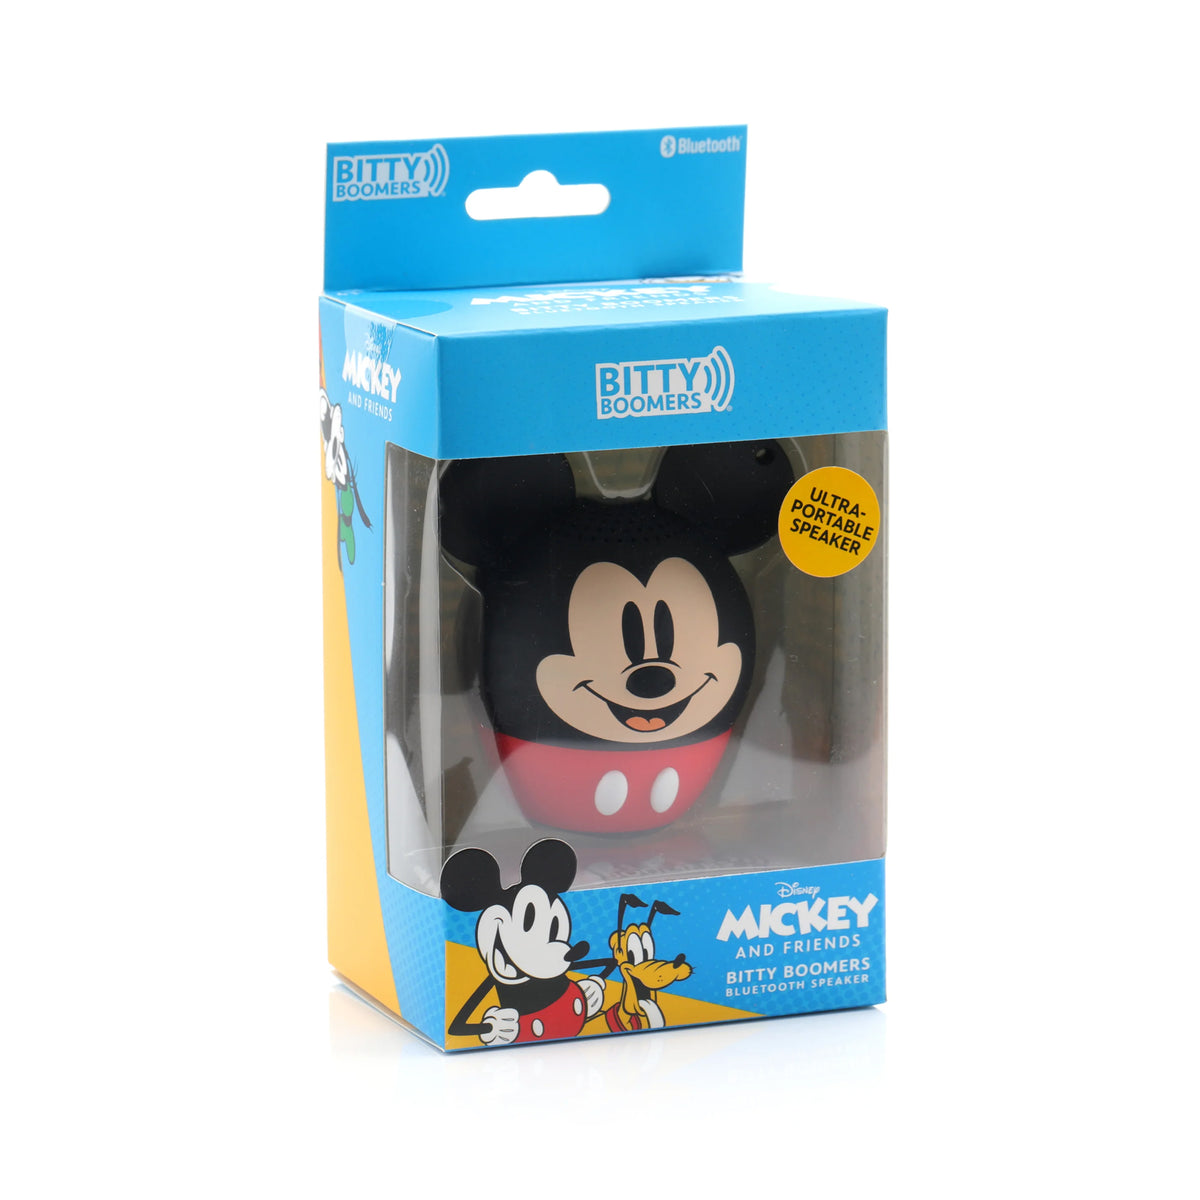 Disney Sensational Six Mickey Mouse Wireless Bluetooth Speaker